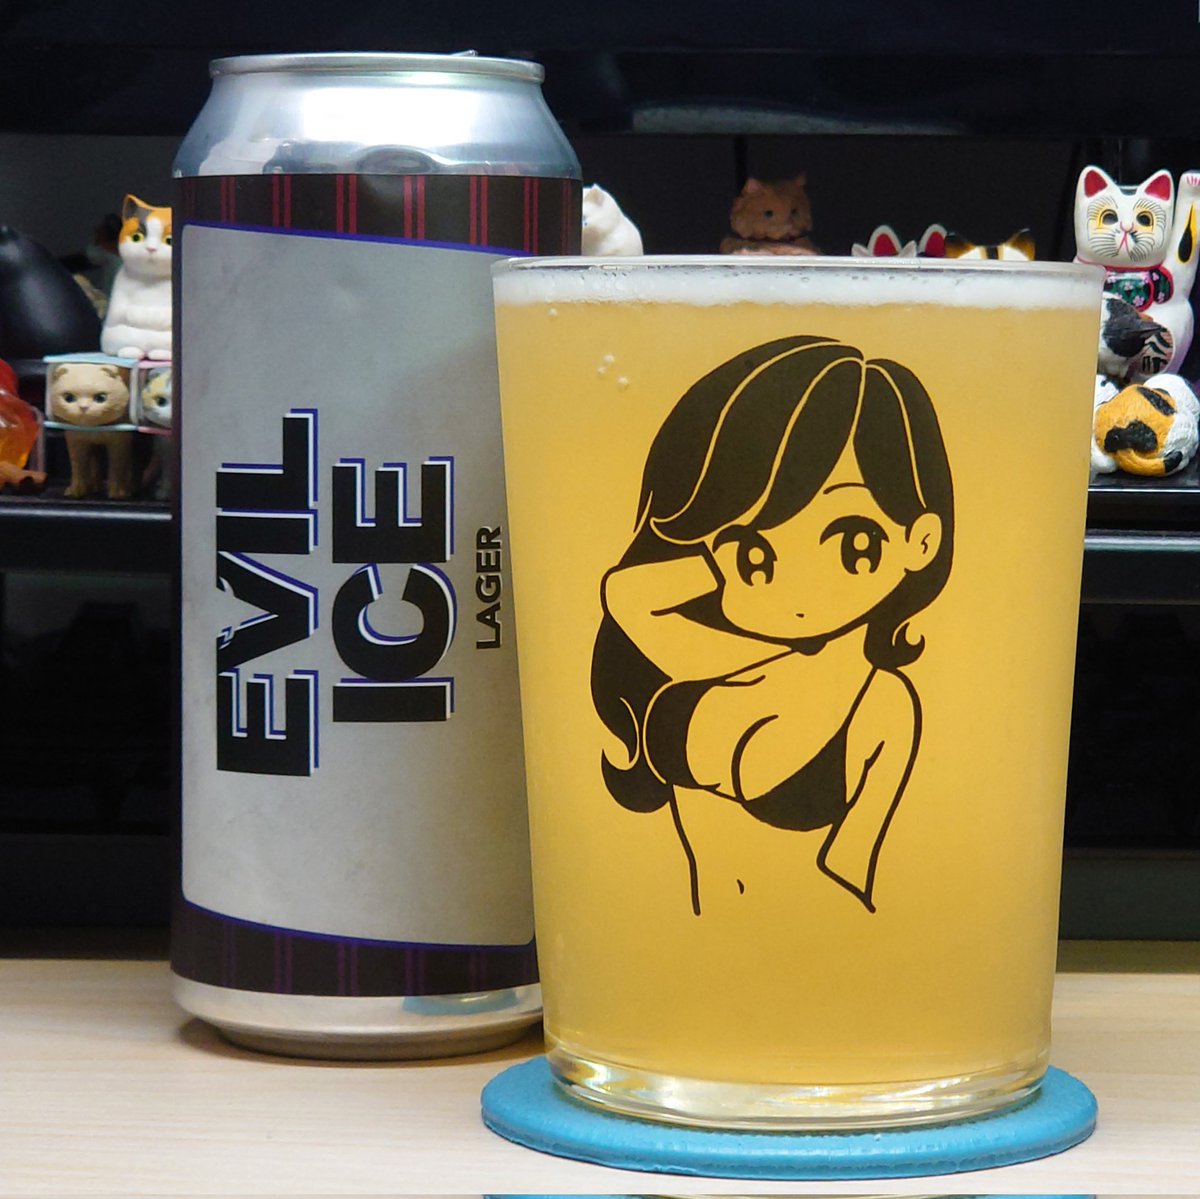 #EvilTwinBrewing
『EVIL ICE』
ABV 6%
Style:LAGER
キレキレサクサククリスプラガー！
旨い♪
#ビール #beer #クラフトビール #craftbeer #酒のスマイル（@sakenosmile_oki） #conix